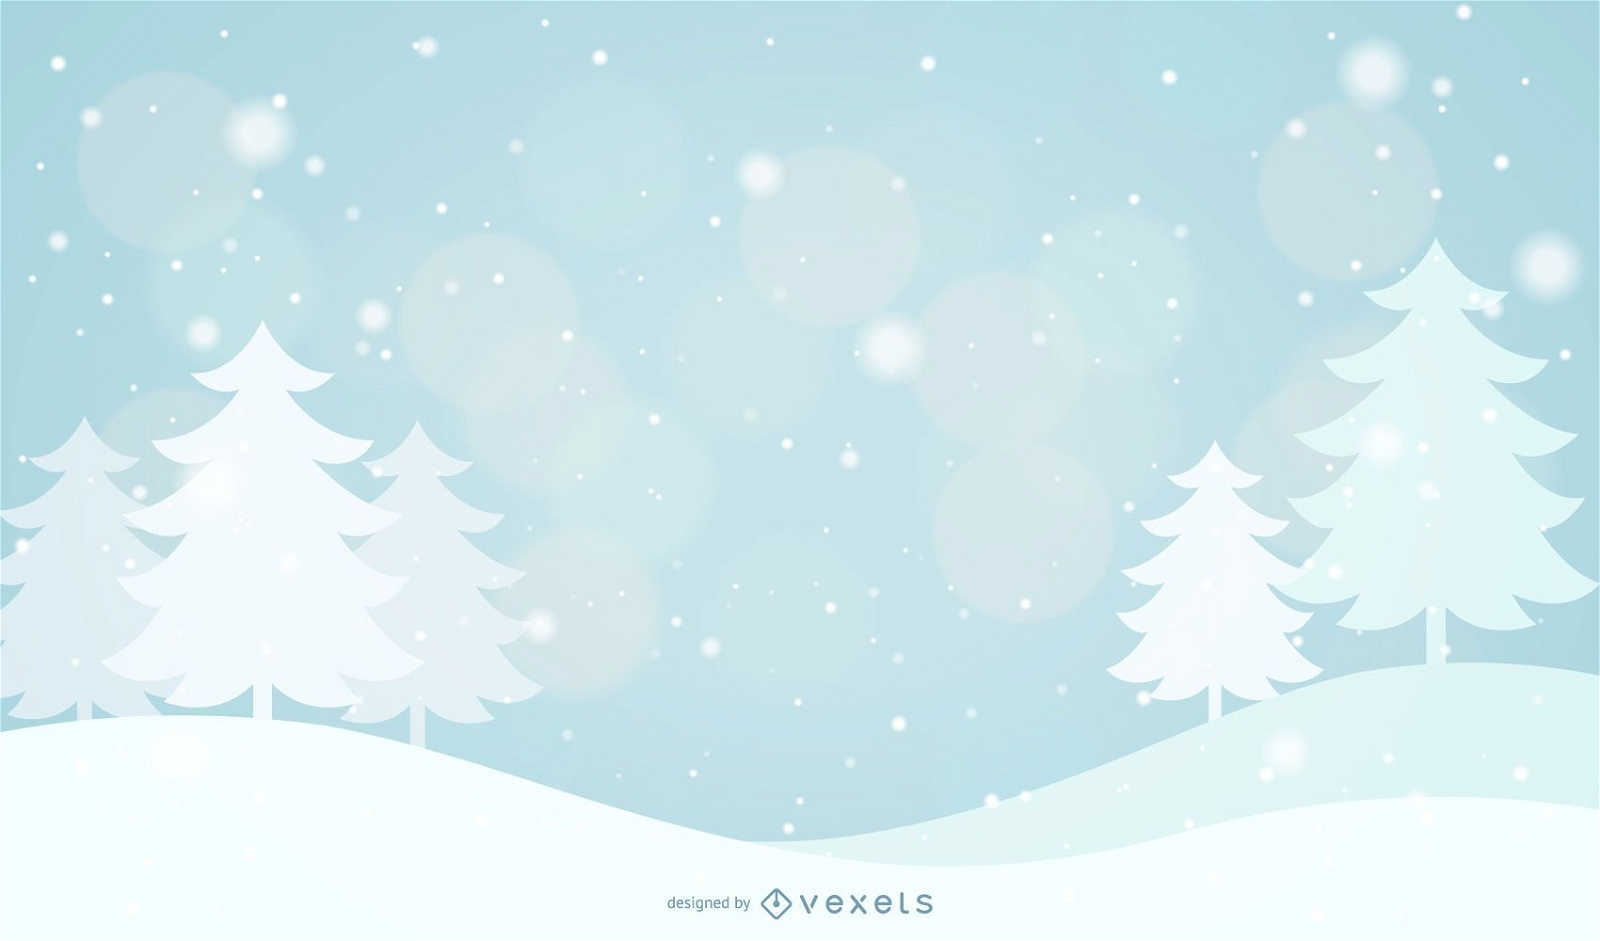 Snowy Trees & Snowflakes Background